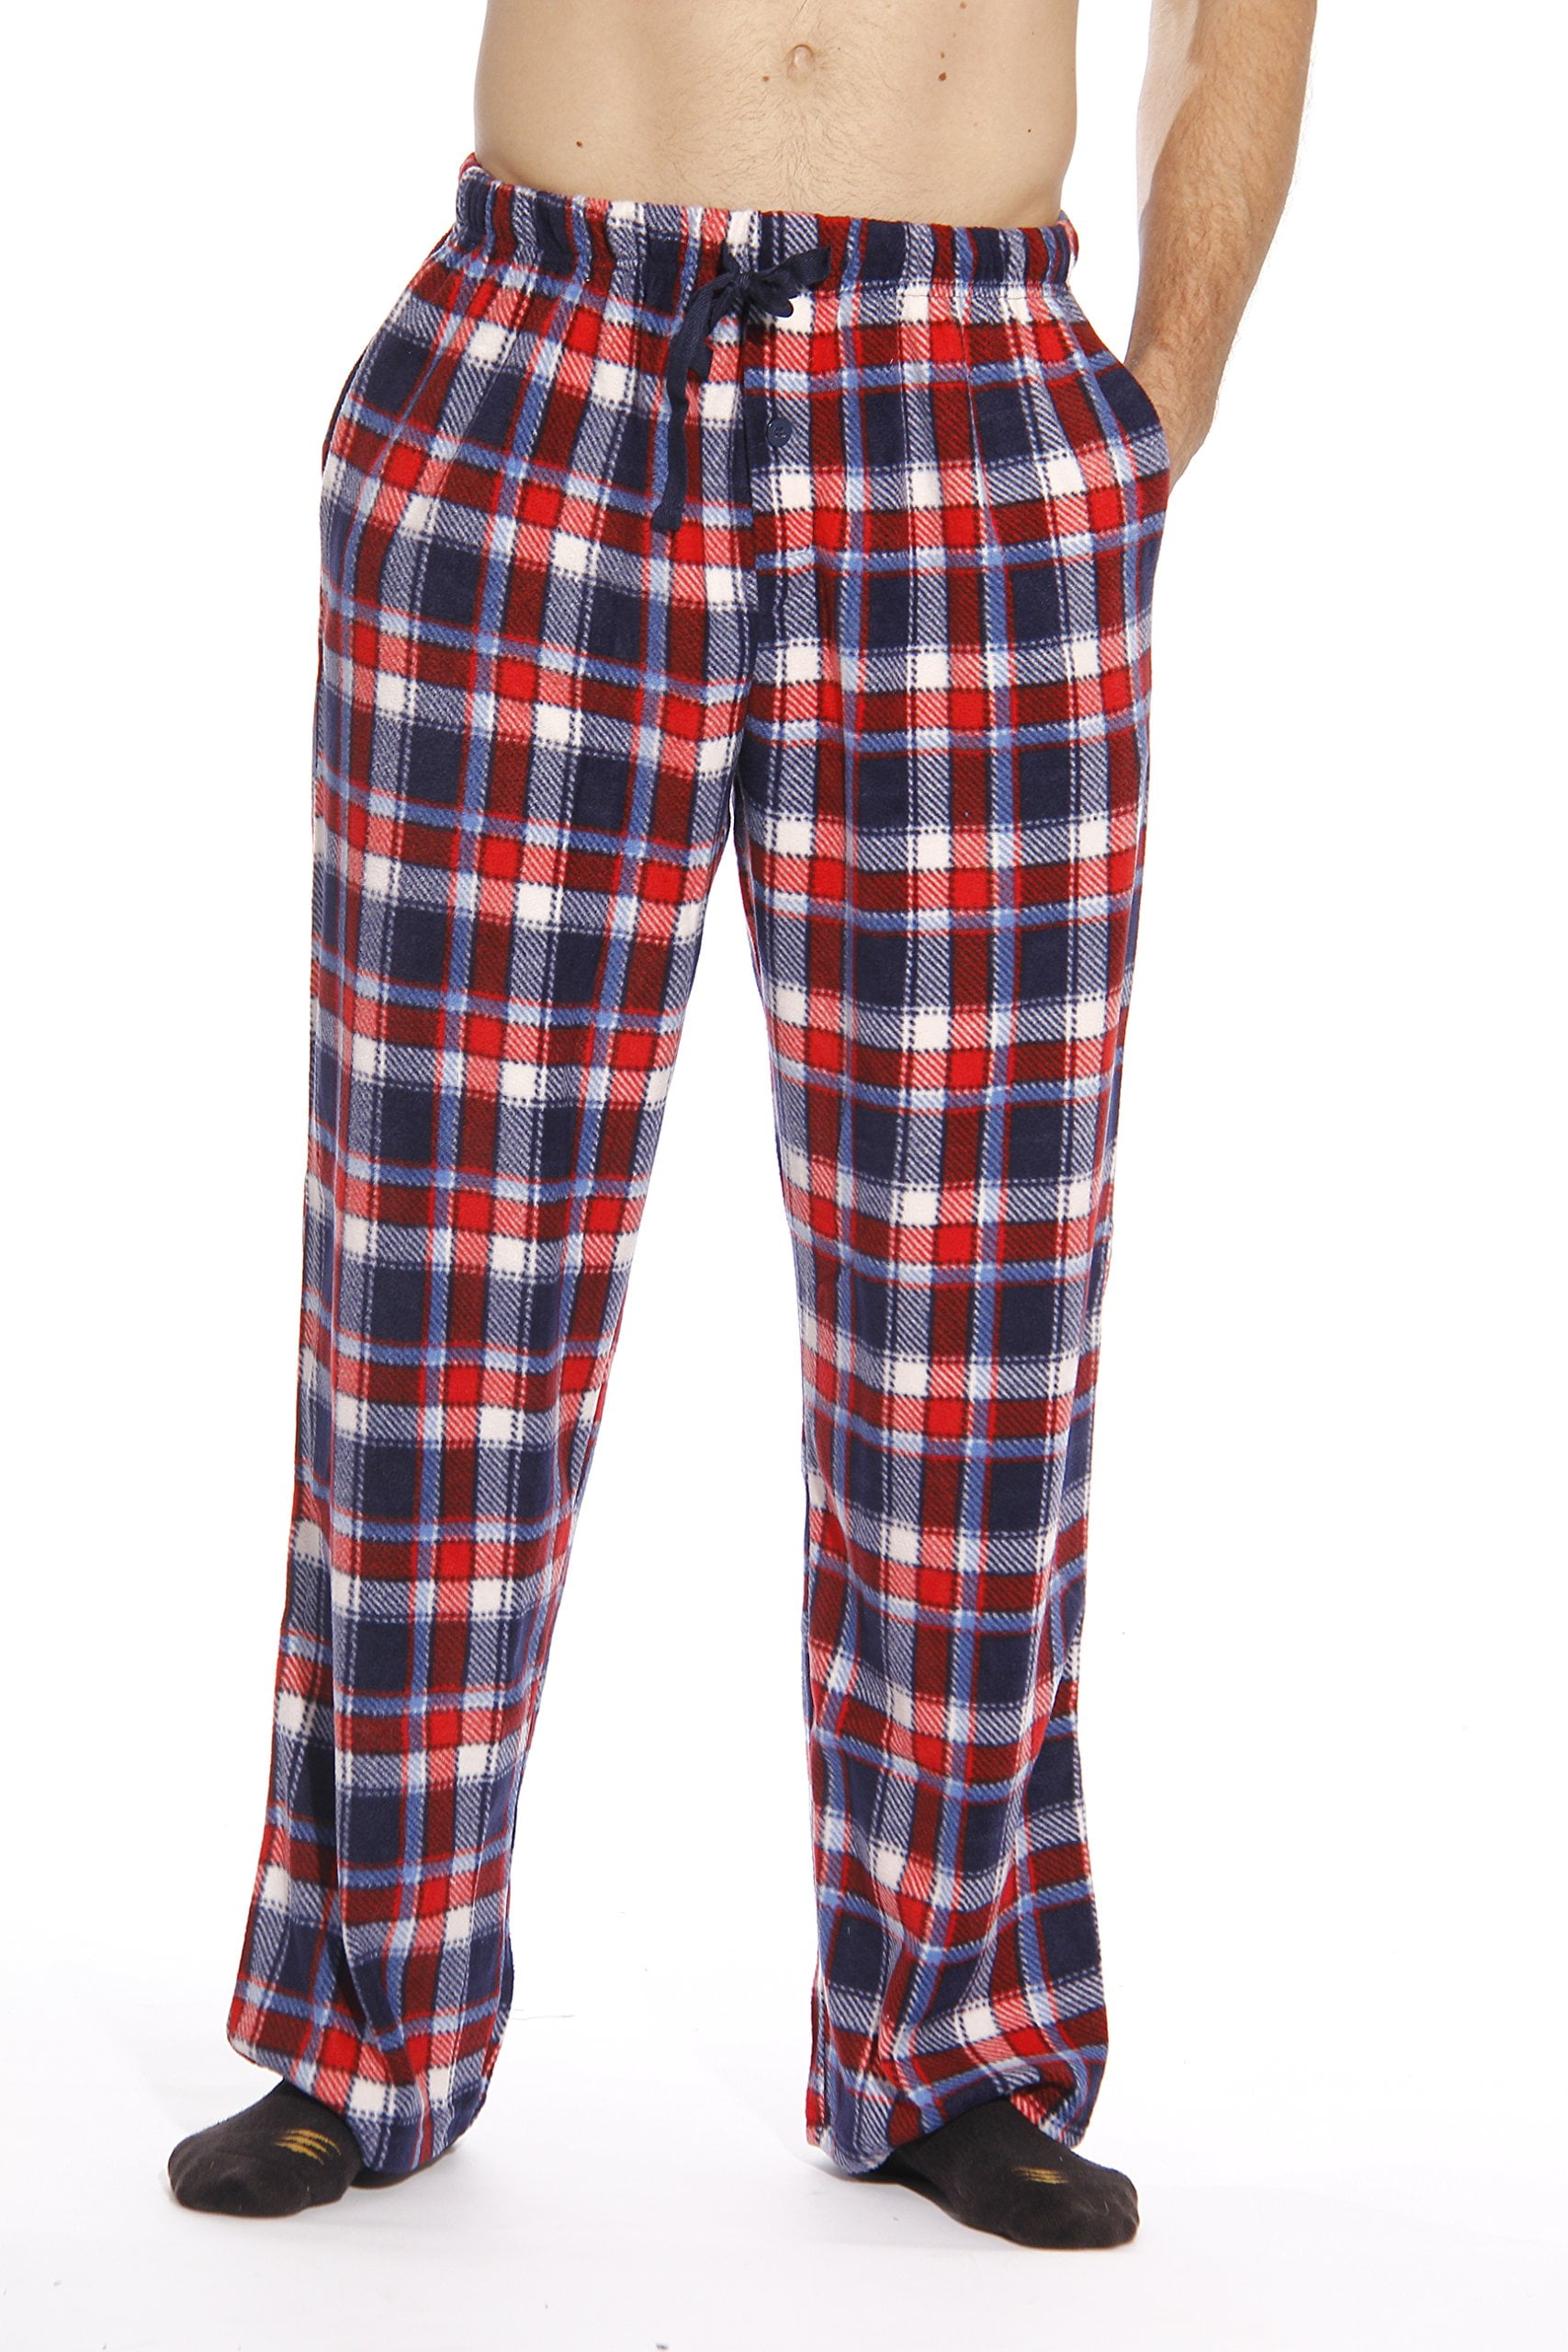 #followme Microfleece Men’s Buffalo Plaid Pajama Pants with Pockets (Red,  White & Blue Plaid, Large)